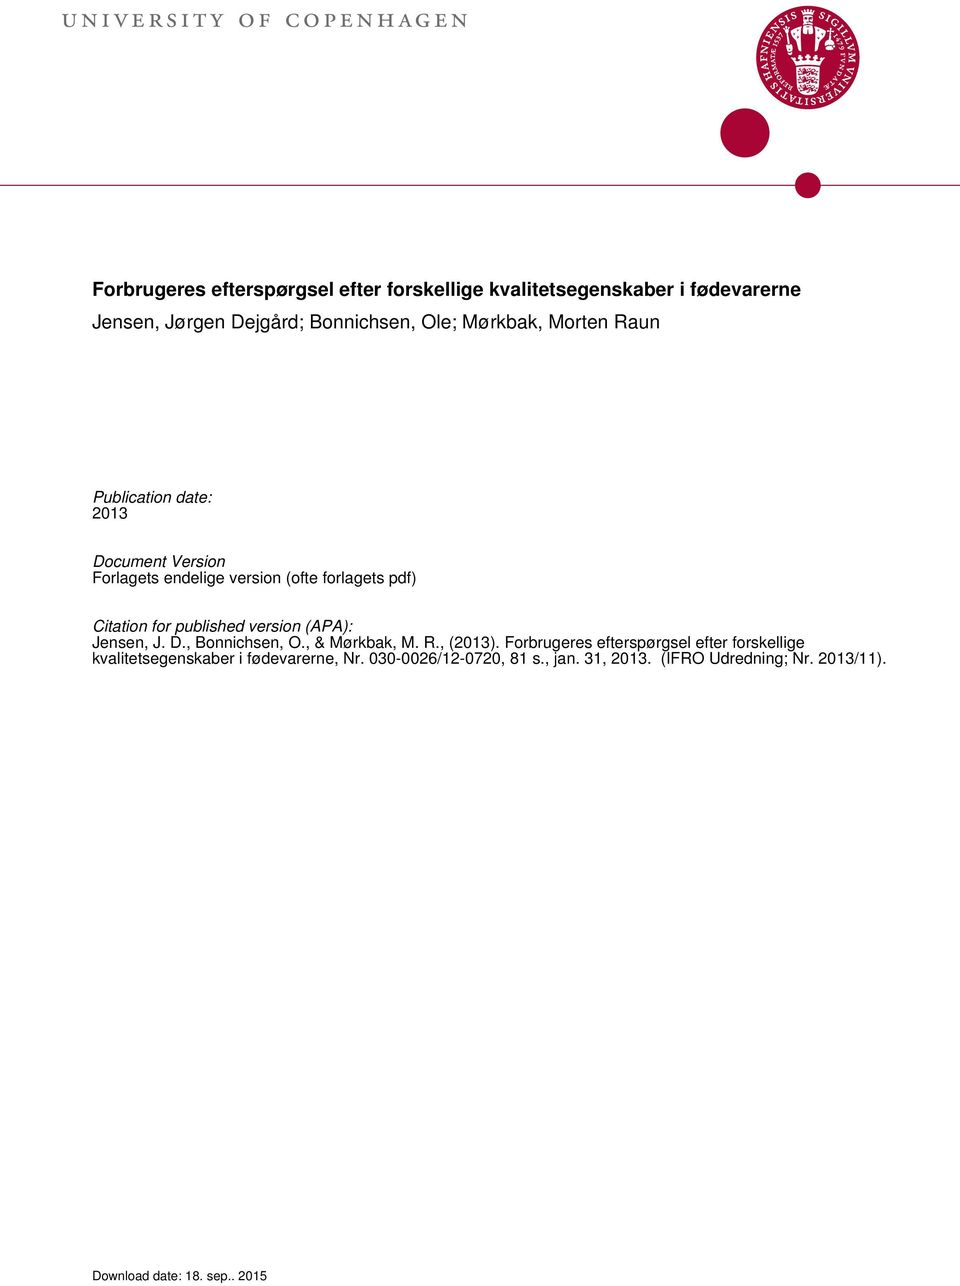 Citation for published version (APA): Jensen, J. D., Bonnichsen, O., & Mørkbak, M. R., (2013).